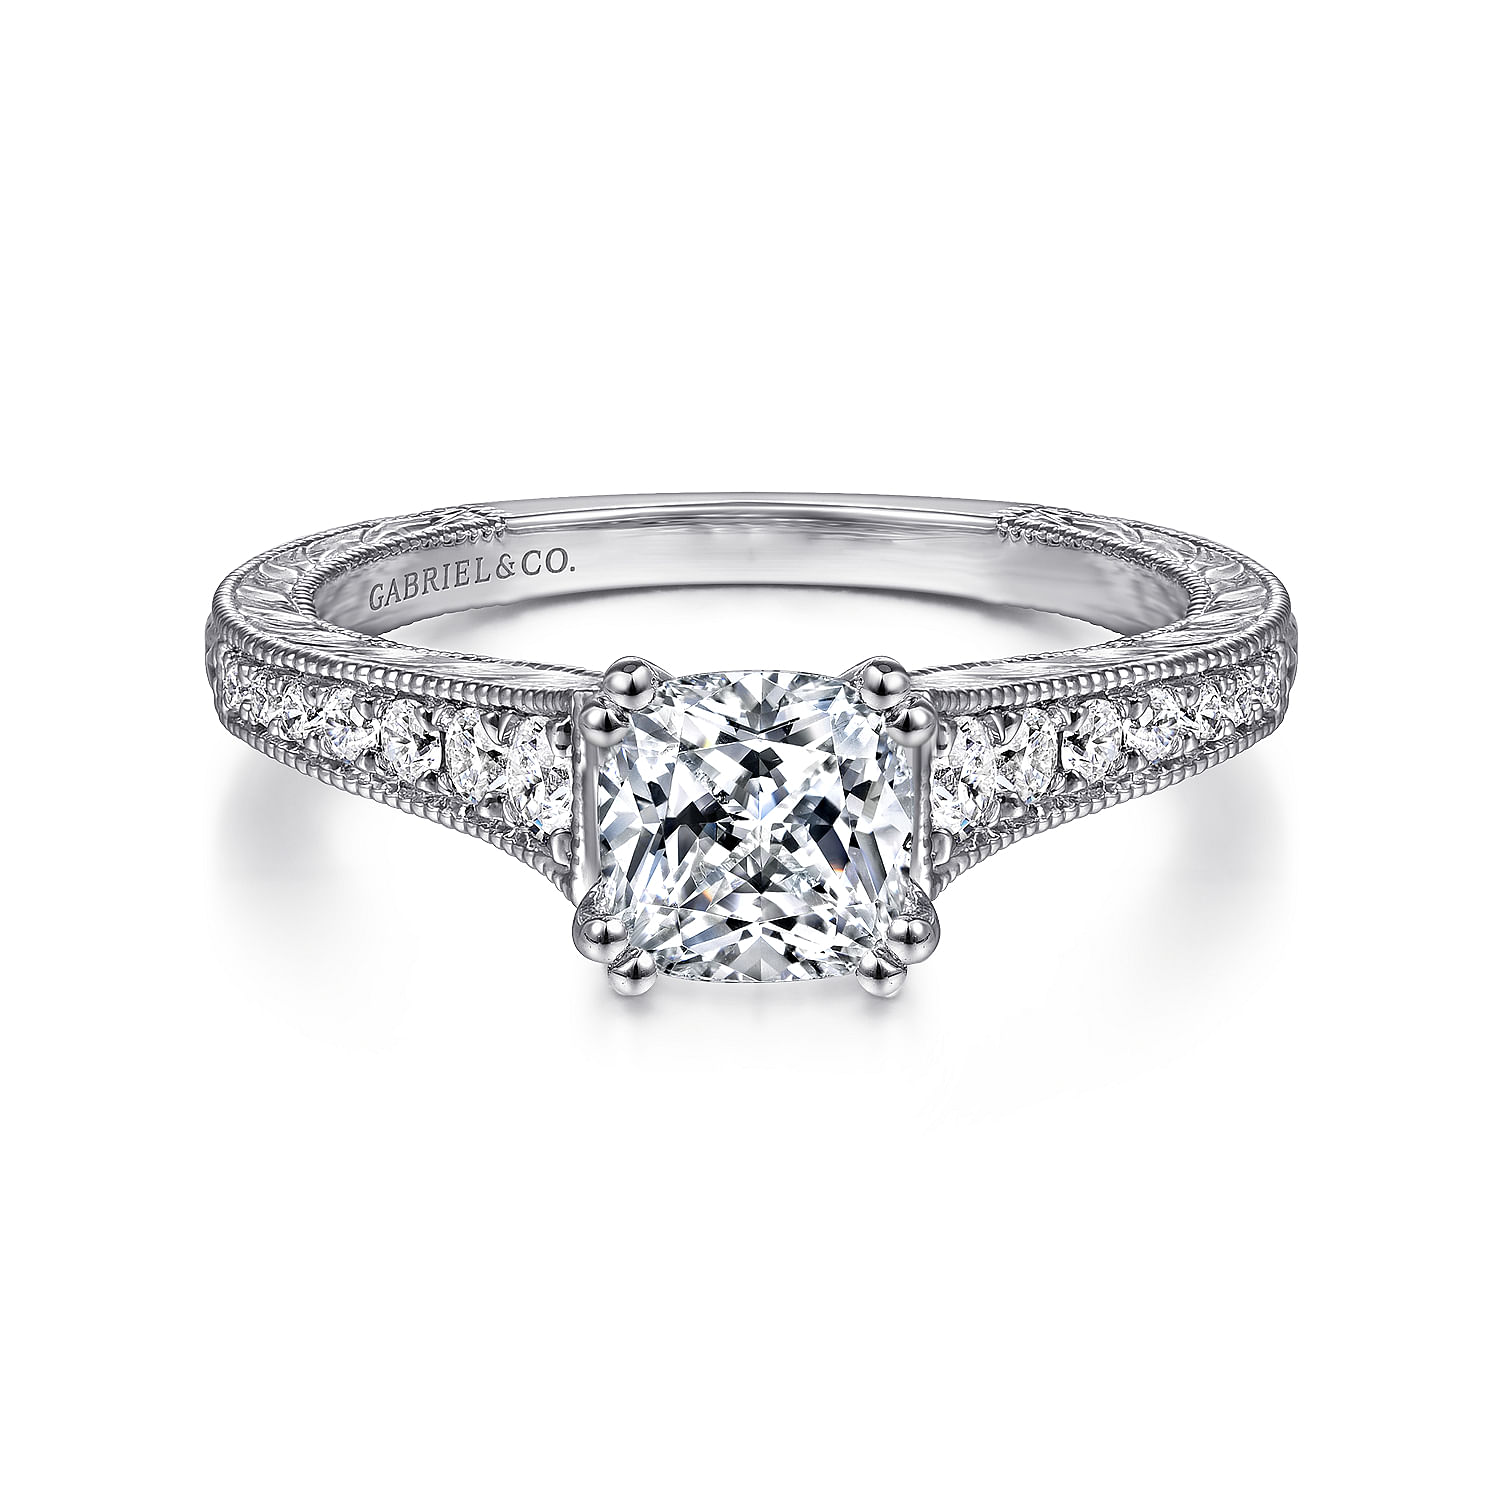 Abigail - 14K White Gold Cushion Cut Diamond Engagement Ring